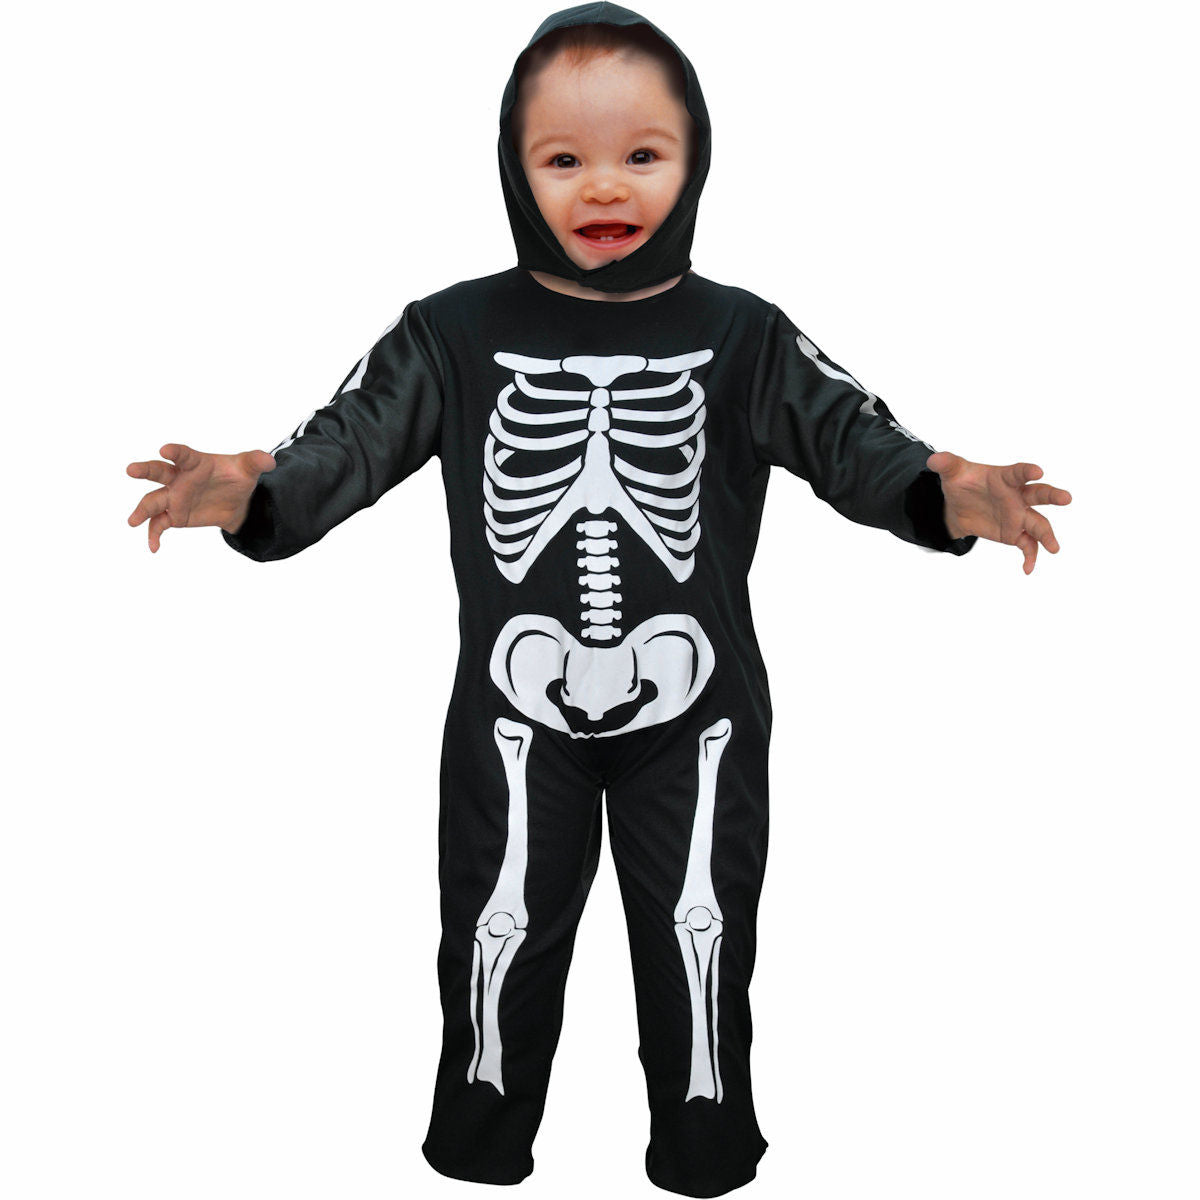 Baby Skeleton Infant Child Halloween Costume So cute